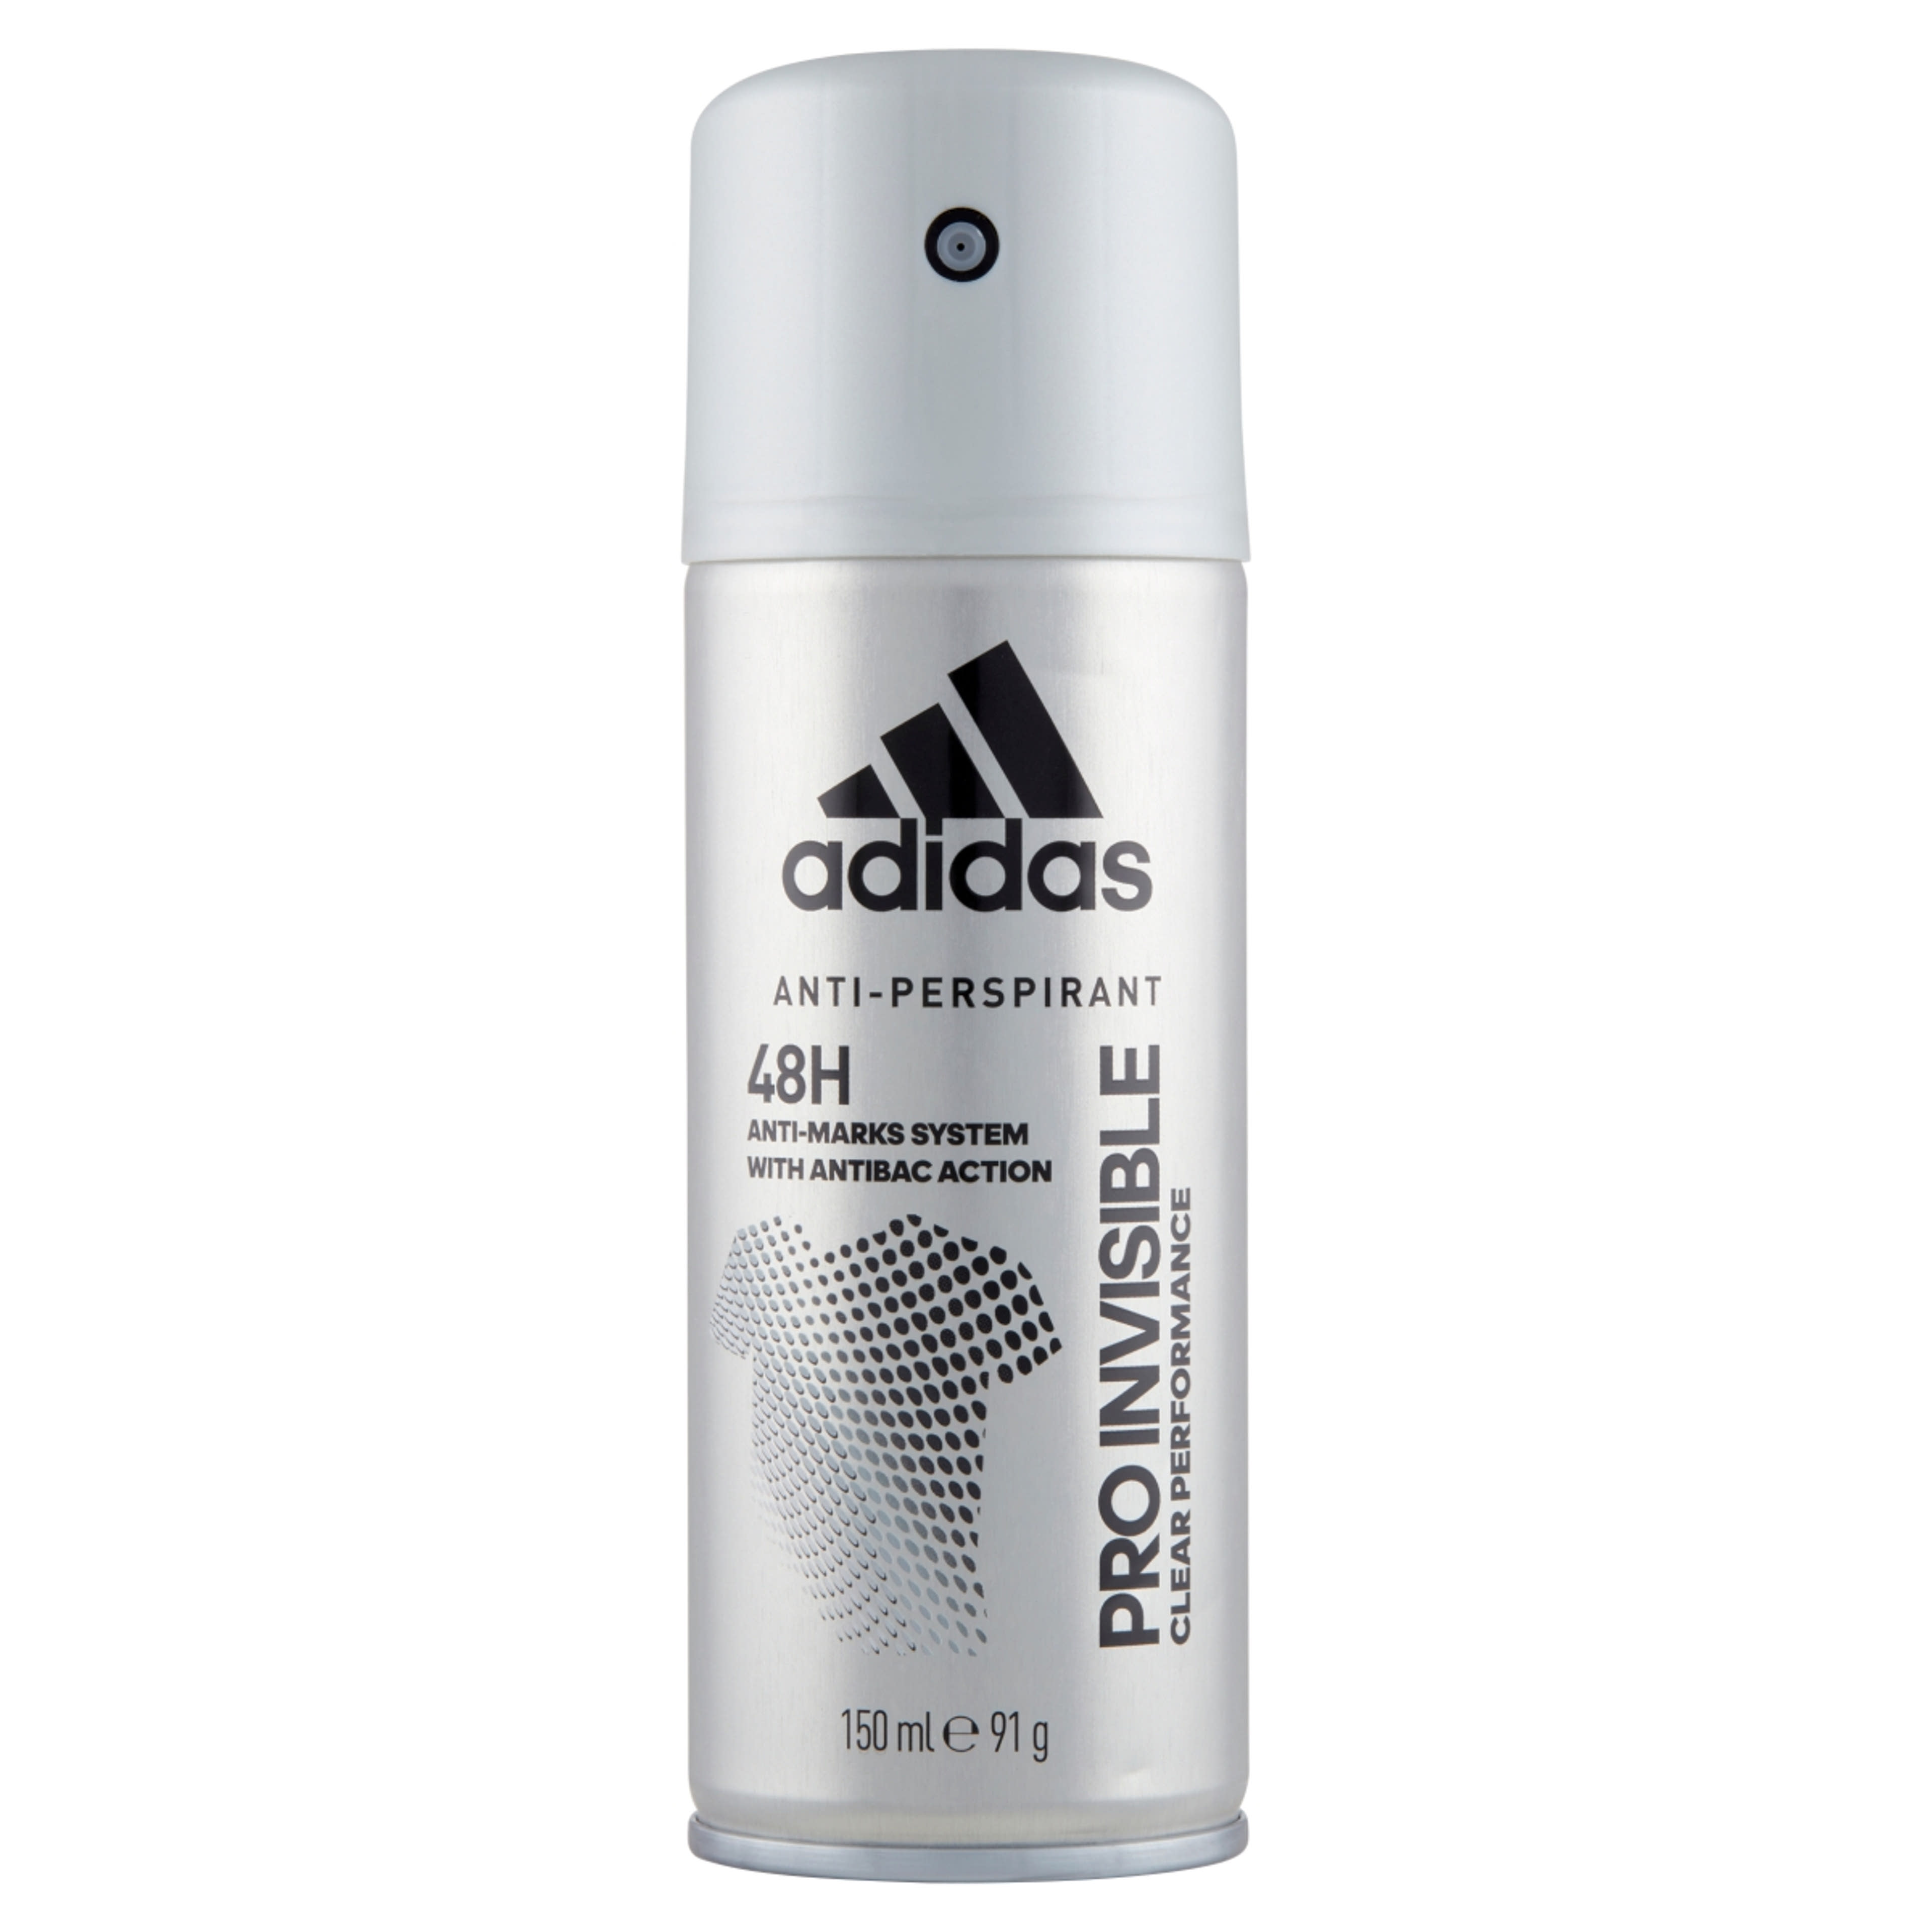 Adidas deodorant spray pro invisible férfi - 150 ml-1